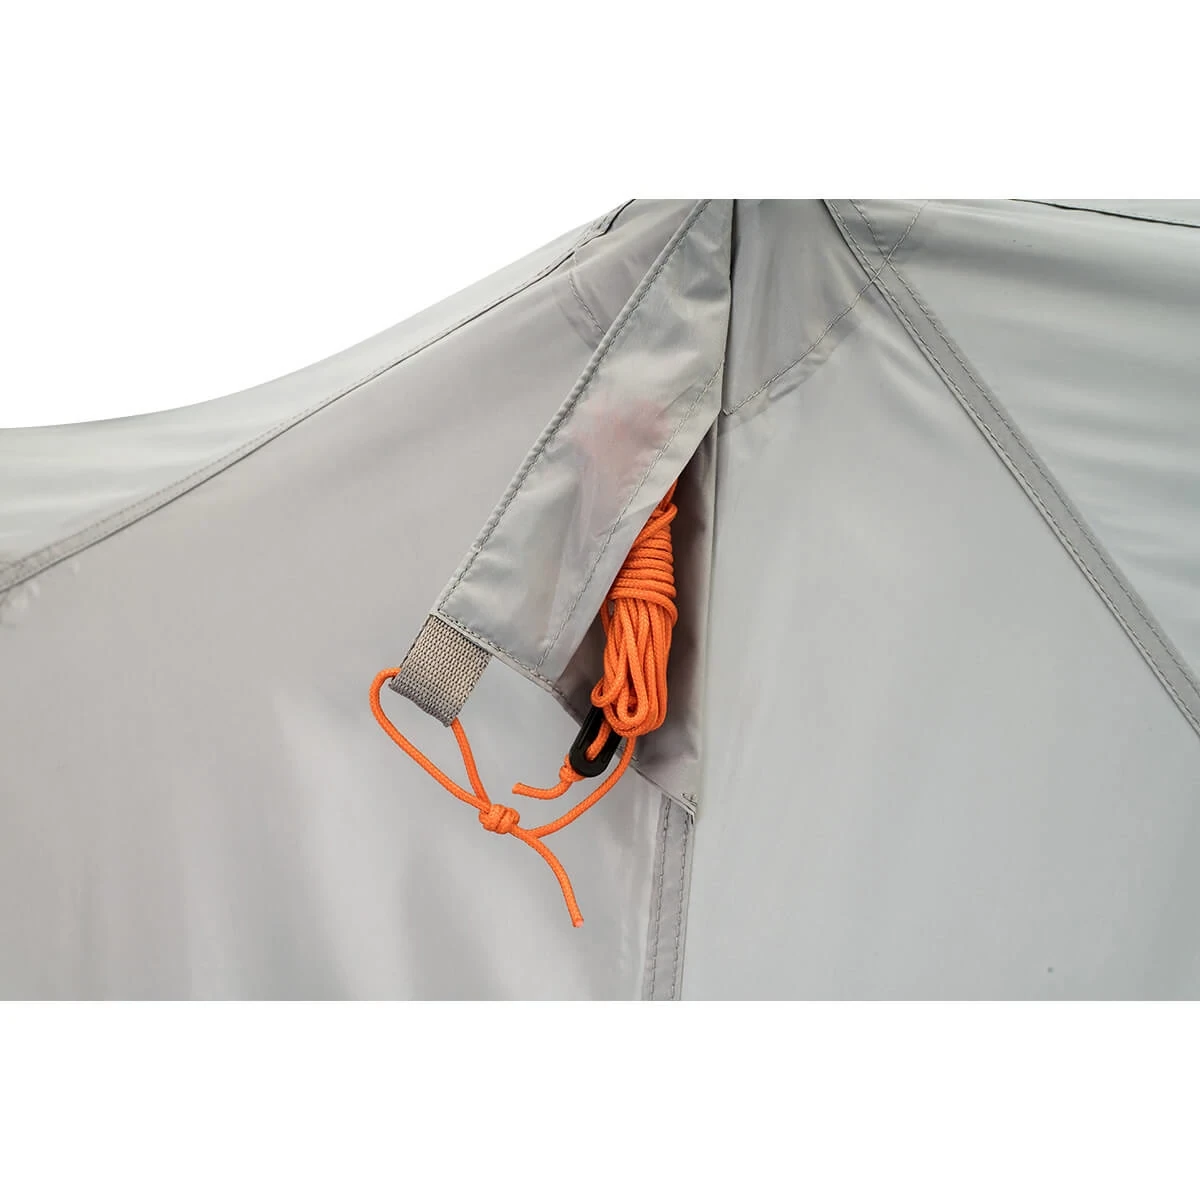 Jade Canyon X6 tent guyline pocket